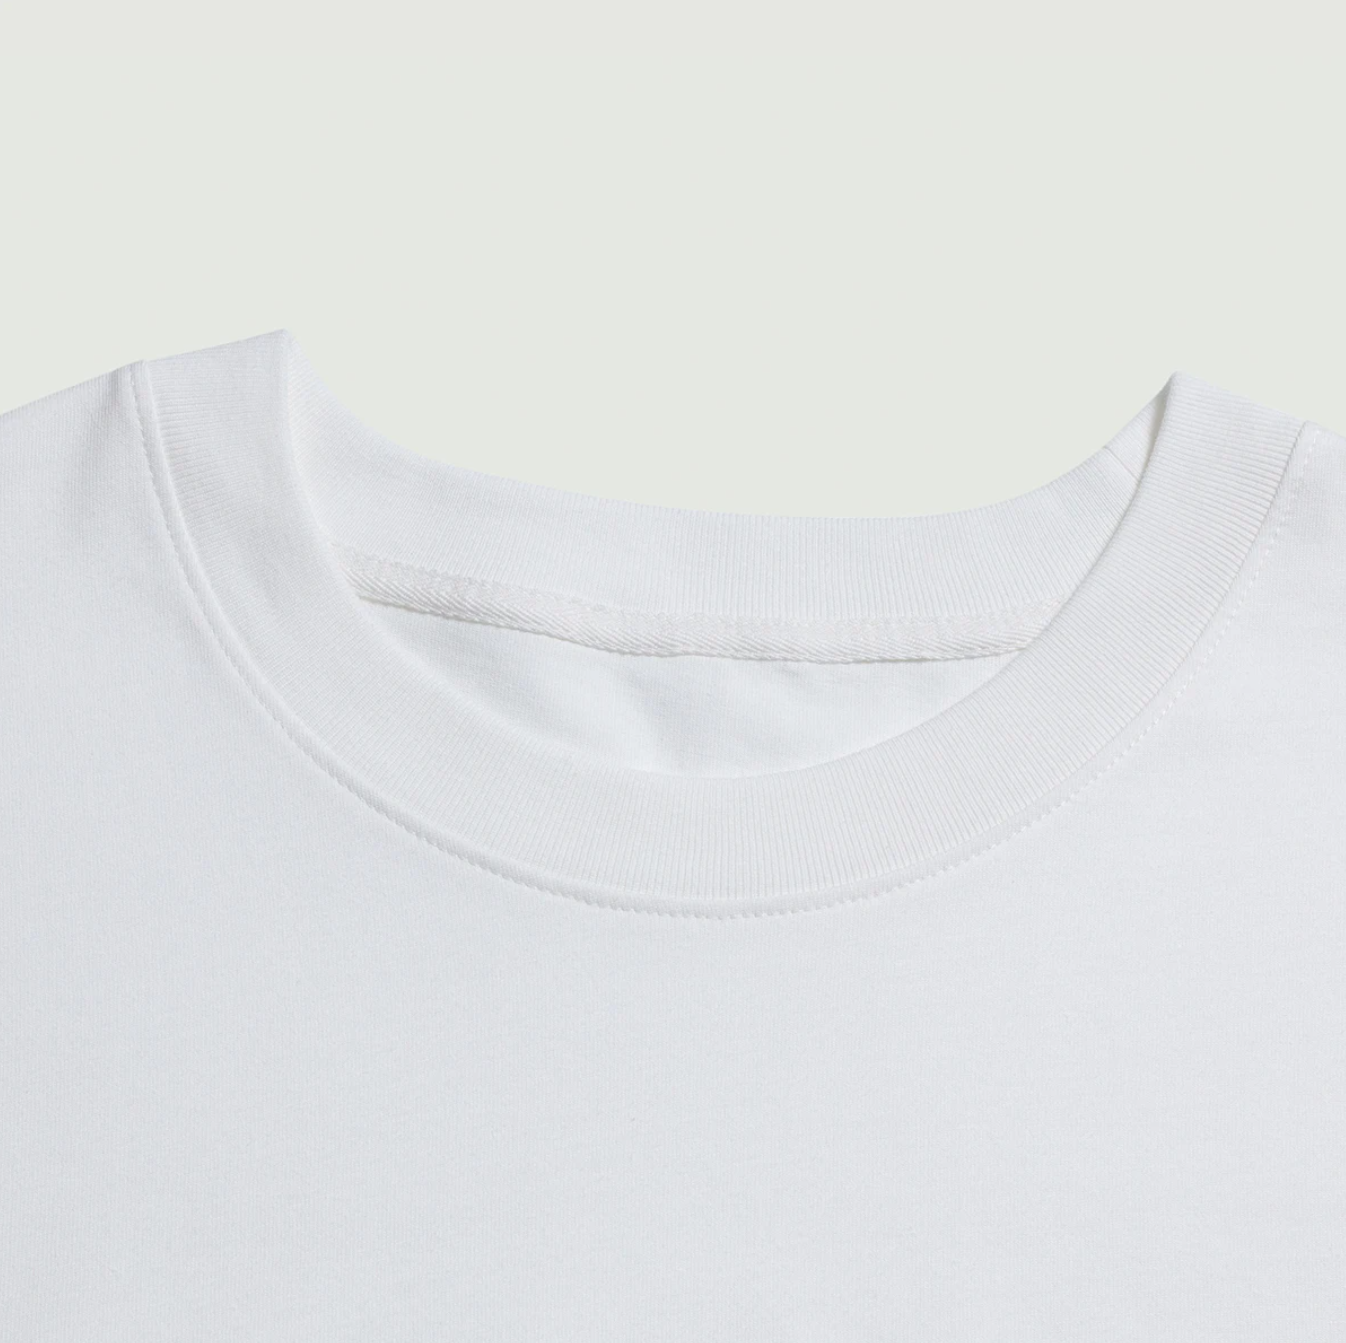 PROUD TO BE (BACK PRINT) - Unisex Oversized T-shirt